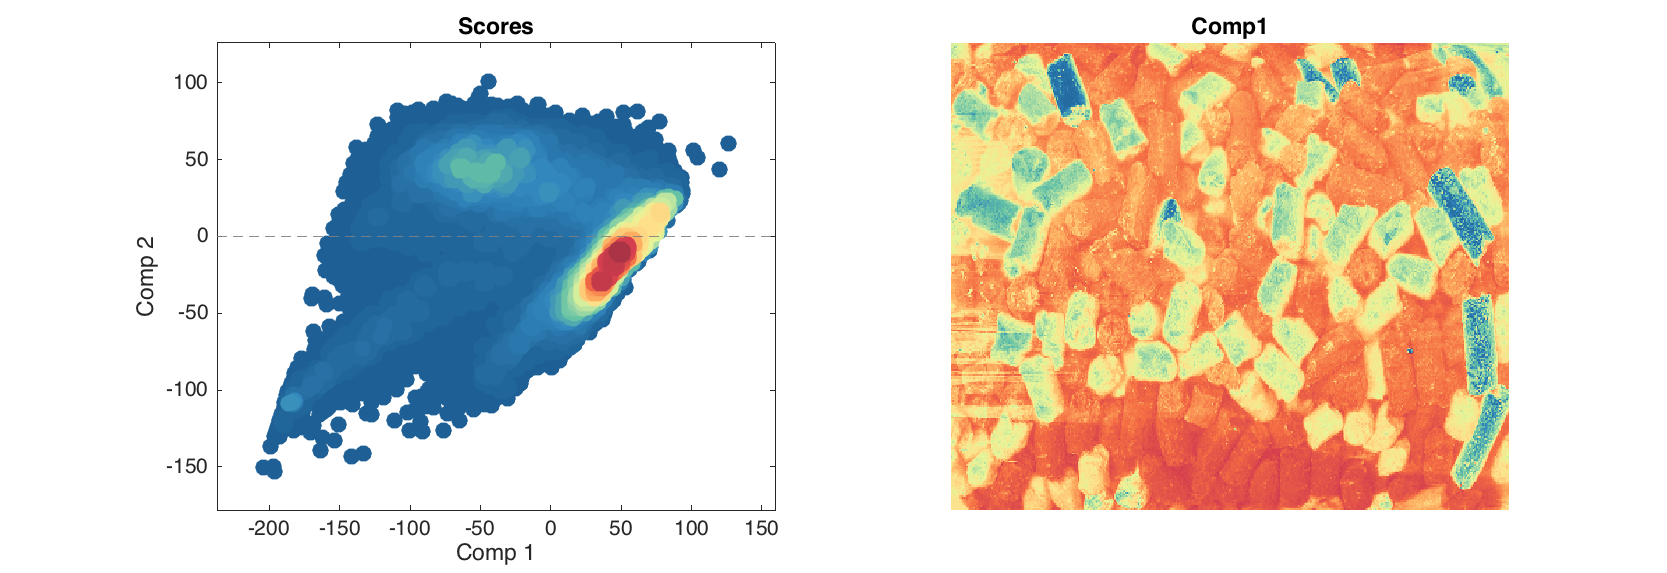 Scatter density plot and score images for PCA model